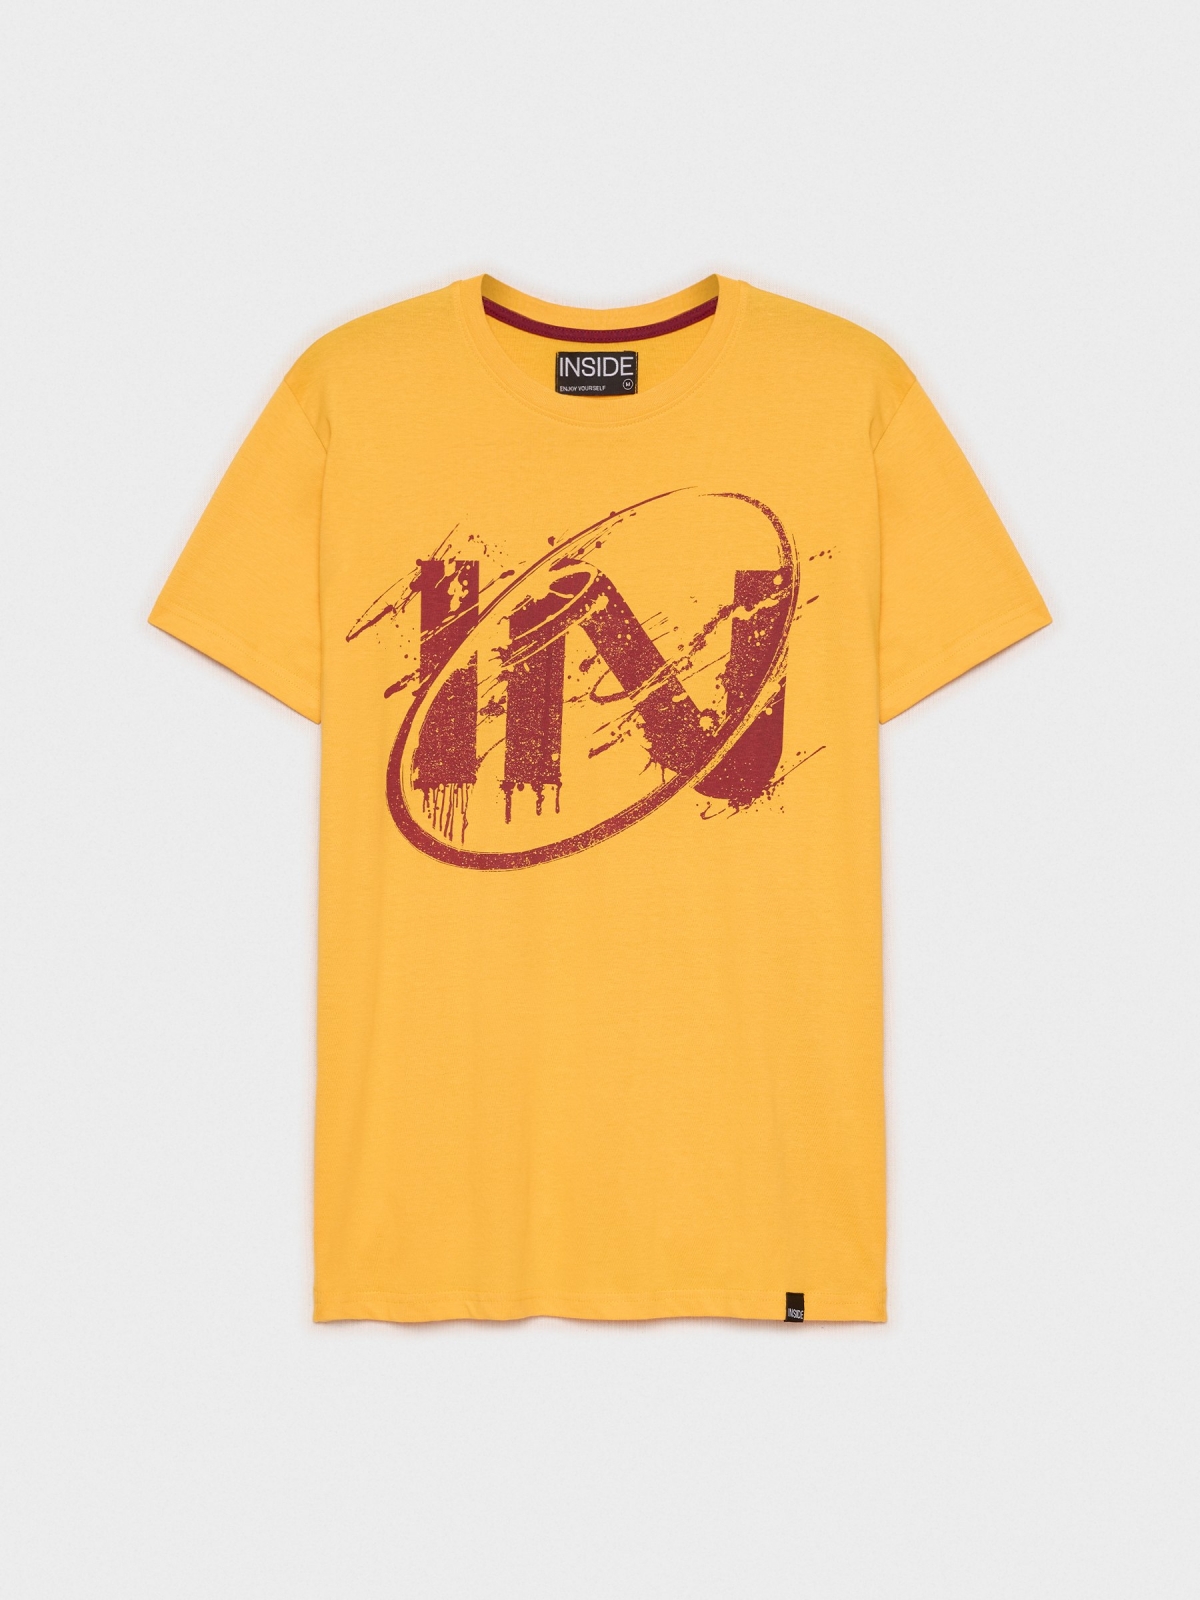  T-shirt printed inside pastel yellow